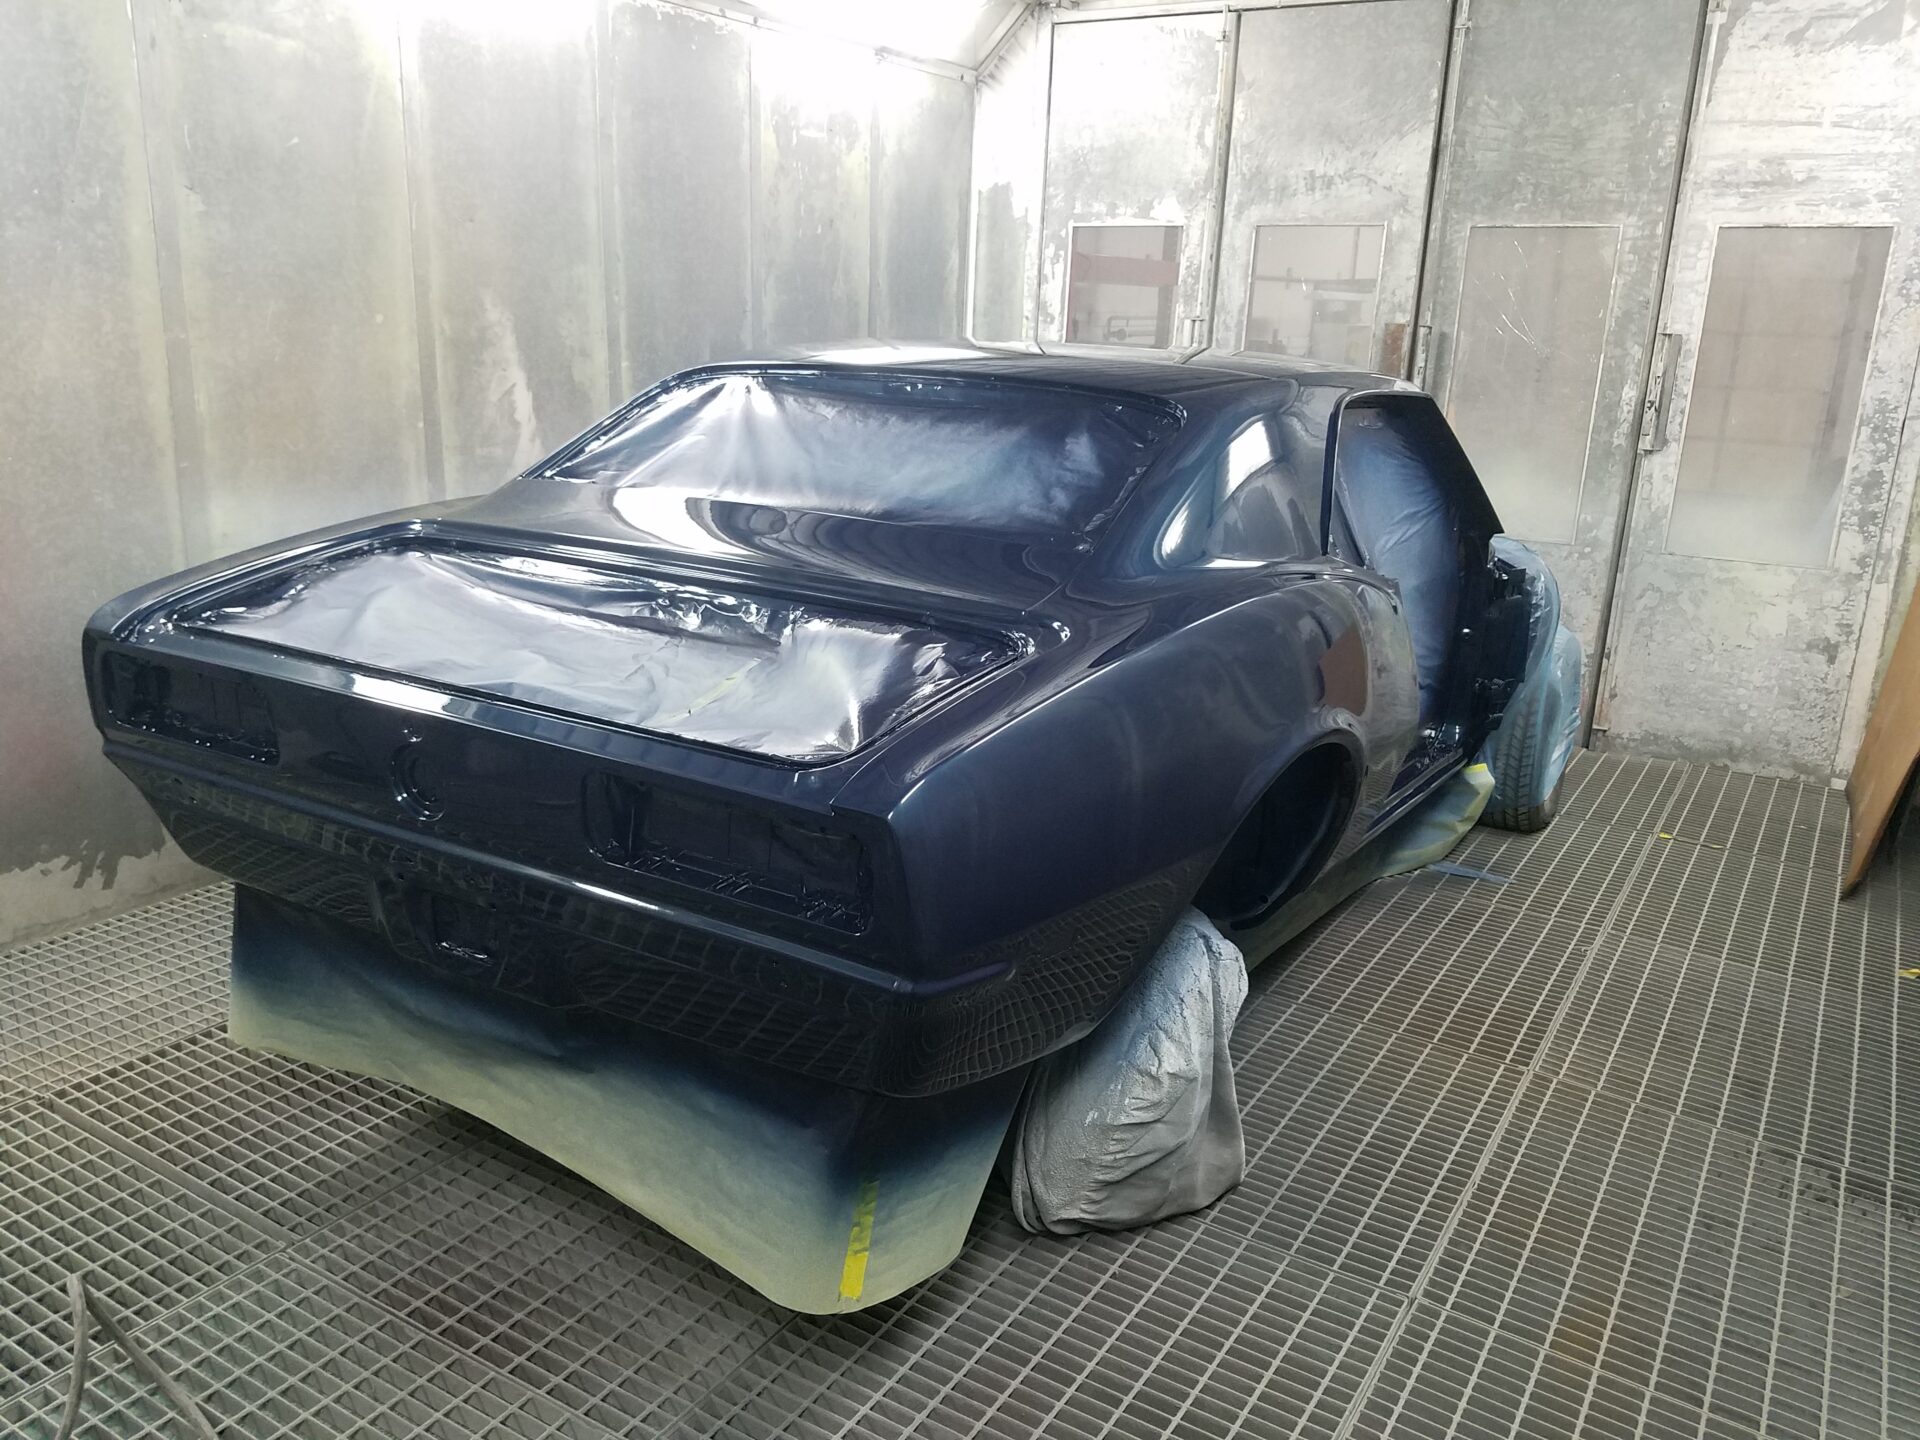 Dark blue paint on the 1968 Chevy Camaro SS